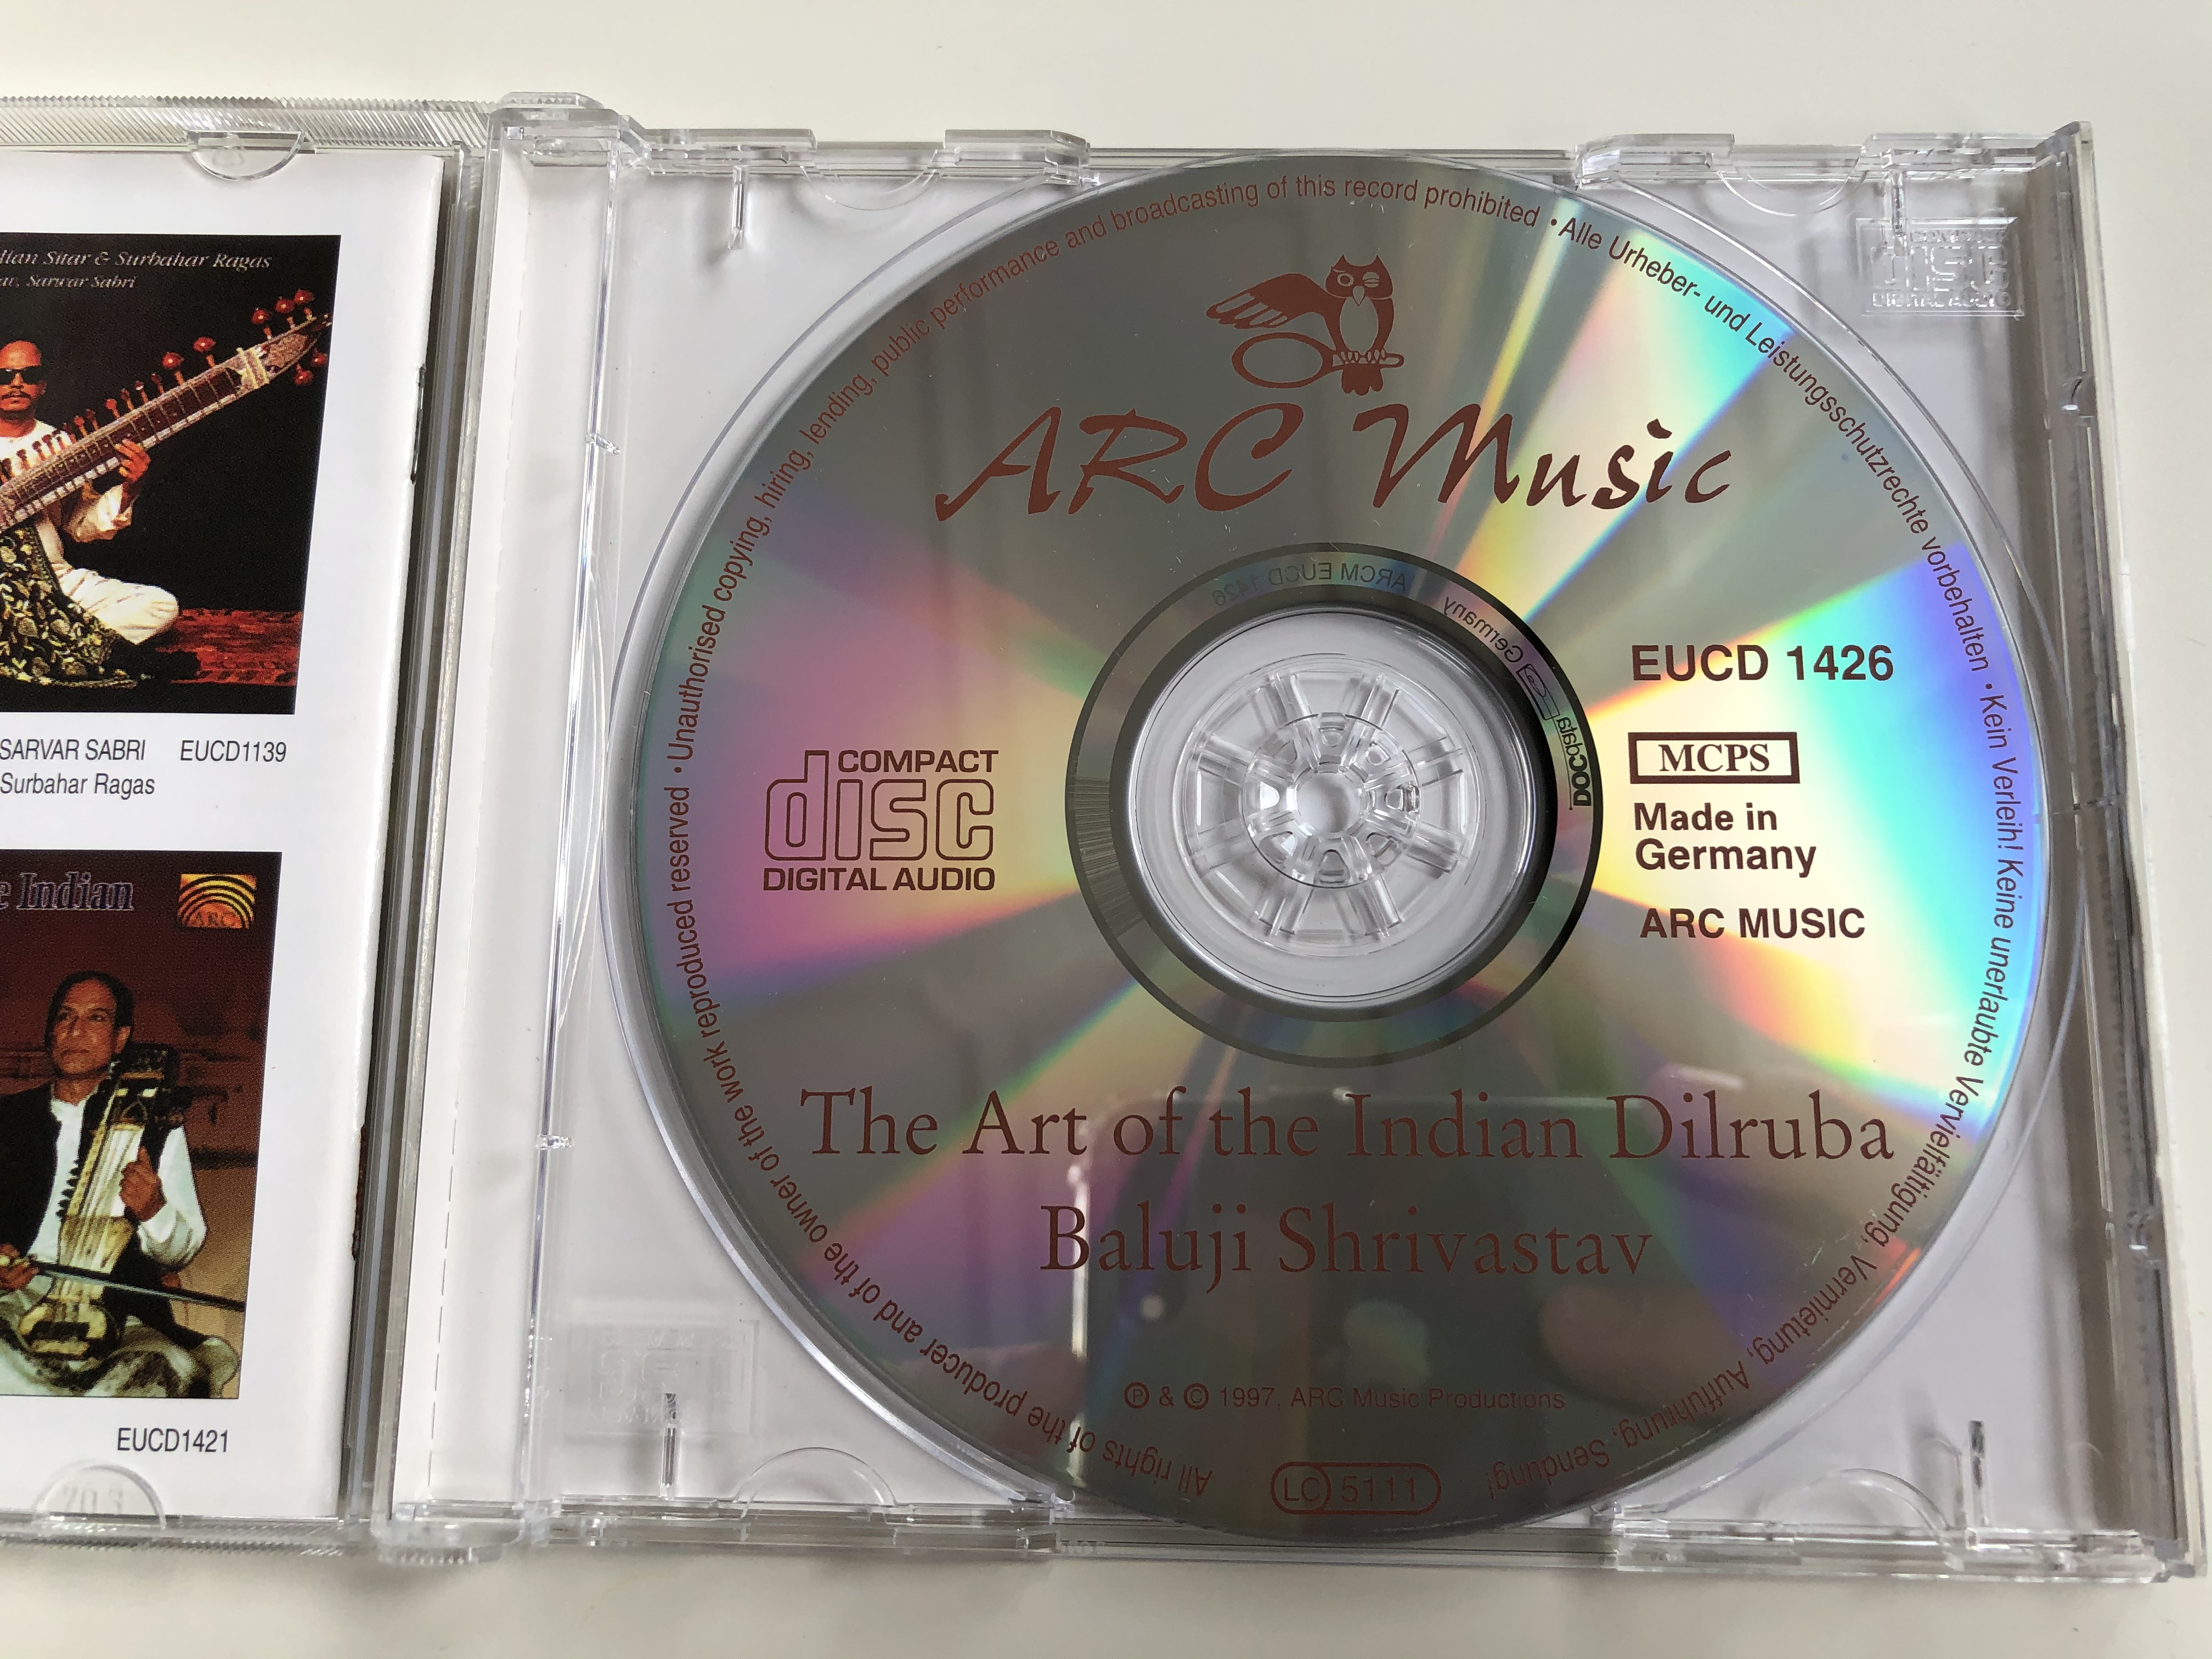 the-art-of-the-indian-dilruba-baluji-shrivastav-arc-music-audio-cd-1997-eucd-1426-5-.jpg